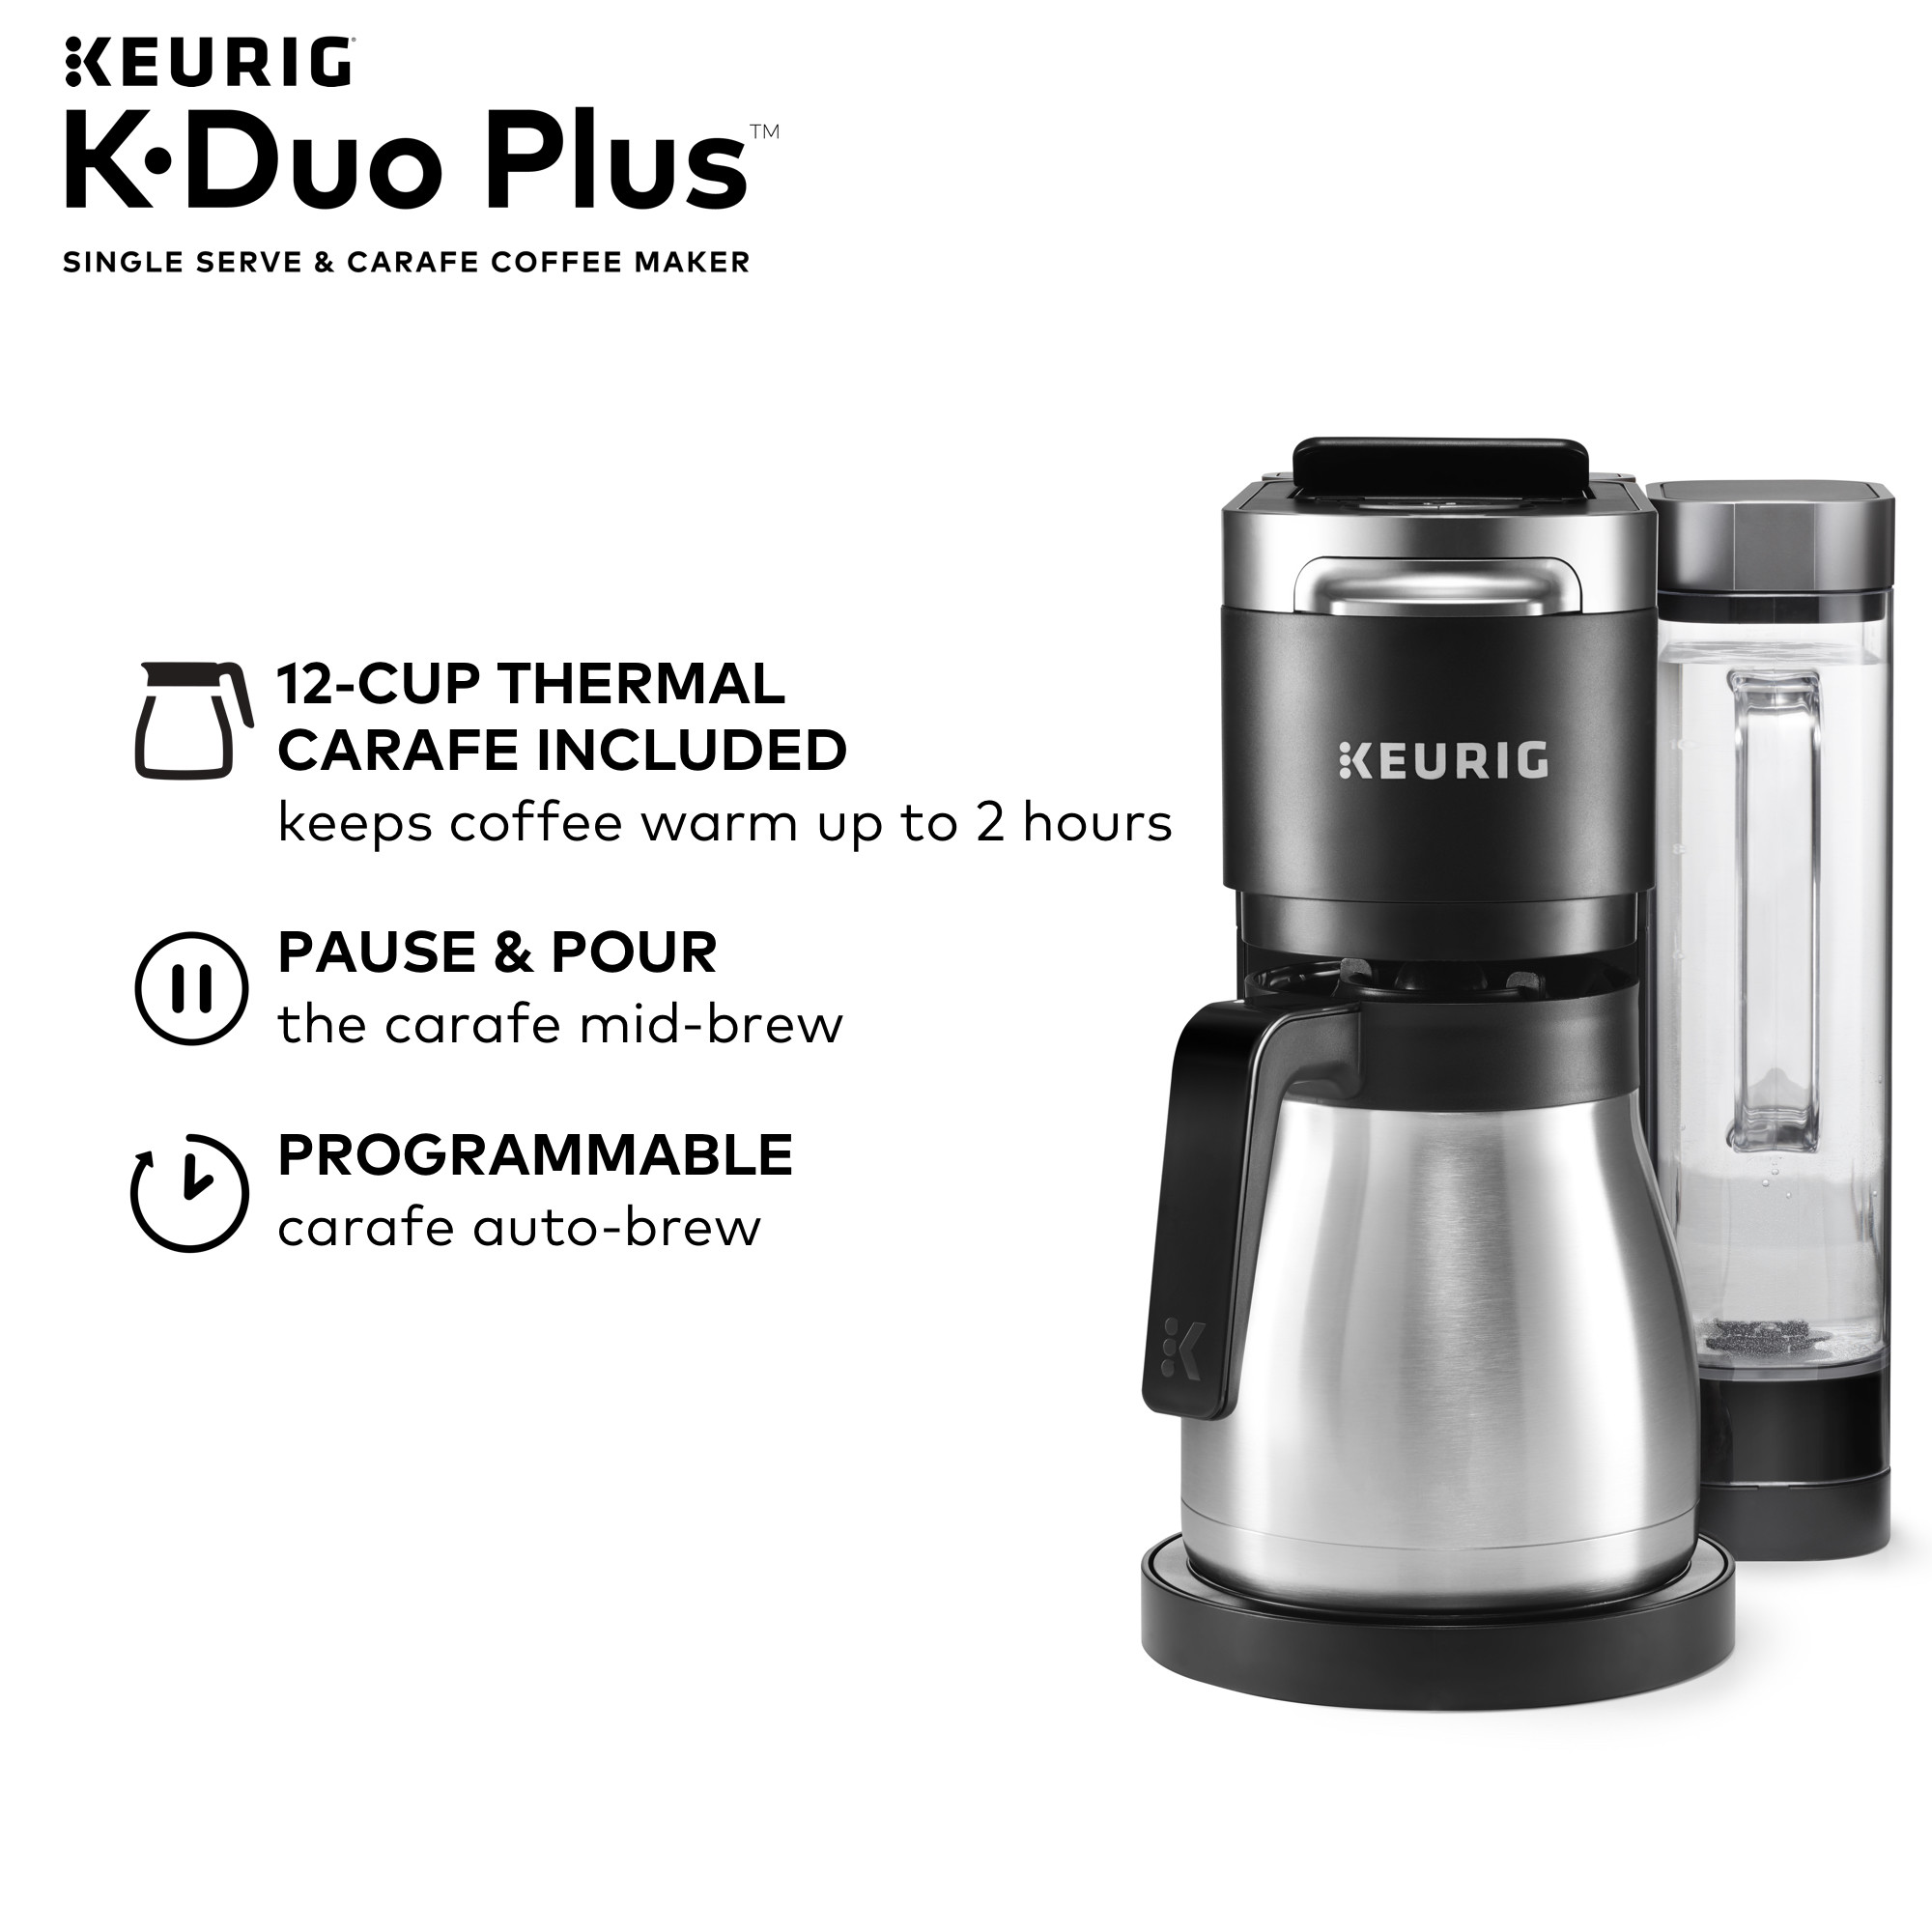 Keurig K-Duo Plus Single Serve & Carafe Coffee Maker - image 17 of 25